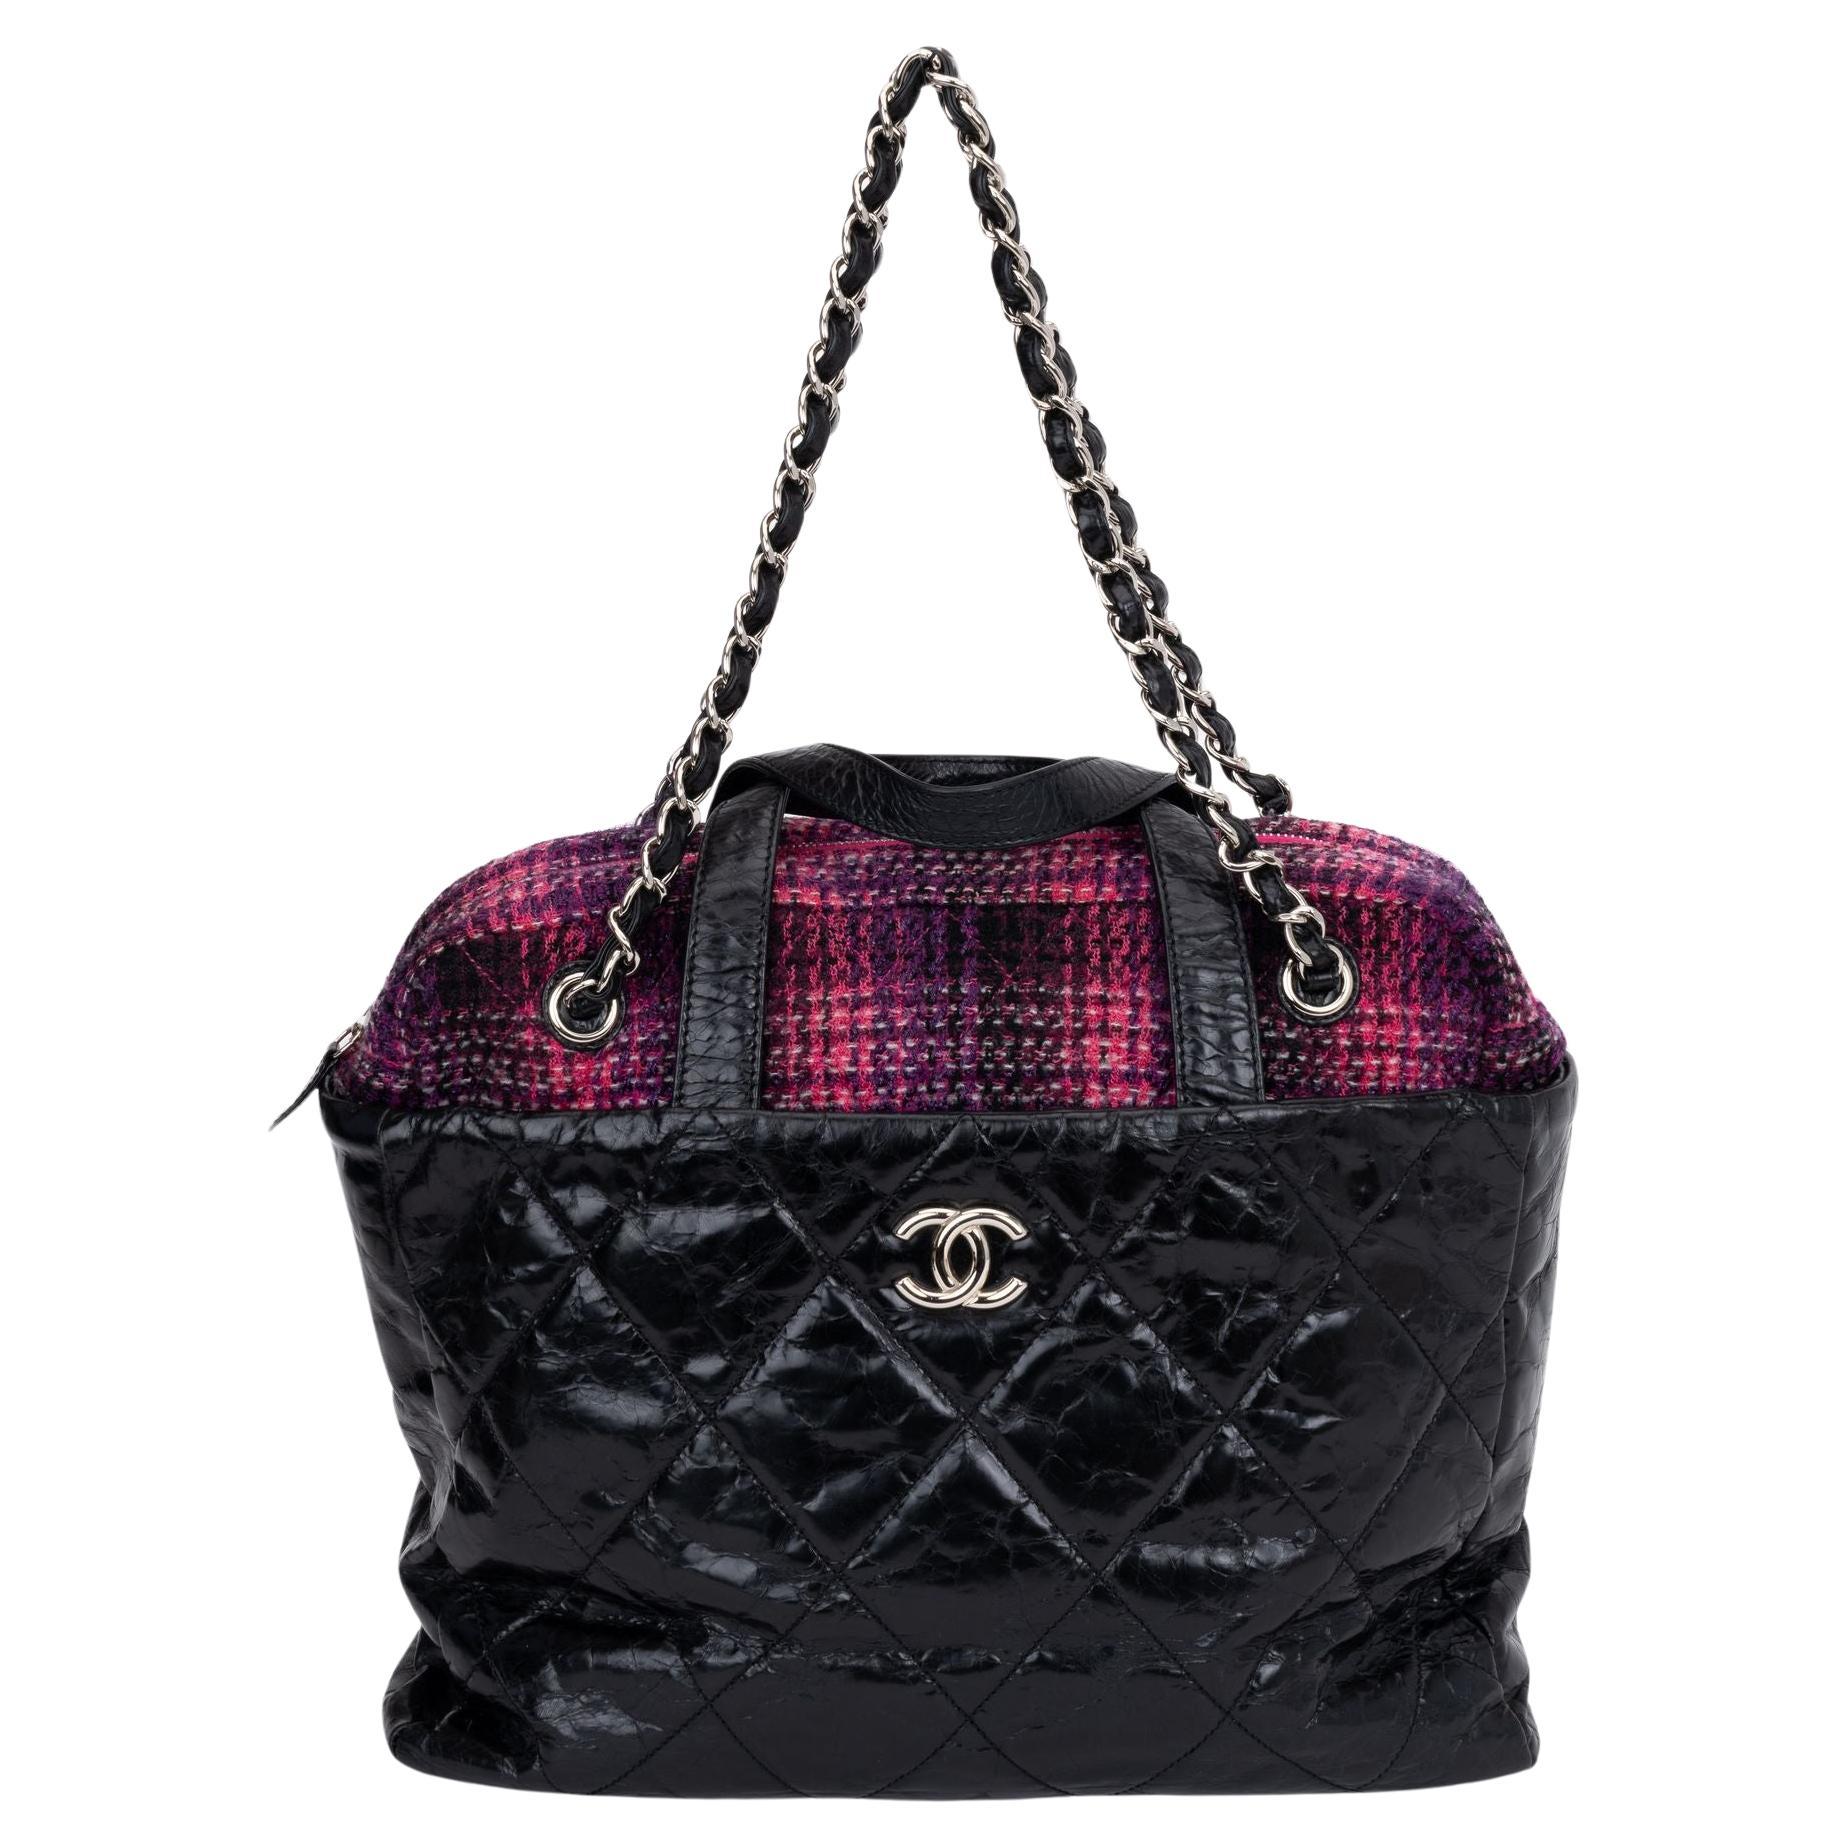 Chanel Black & Fuchsia 2 Way Tote Bag For Sale